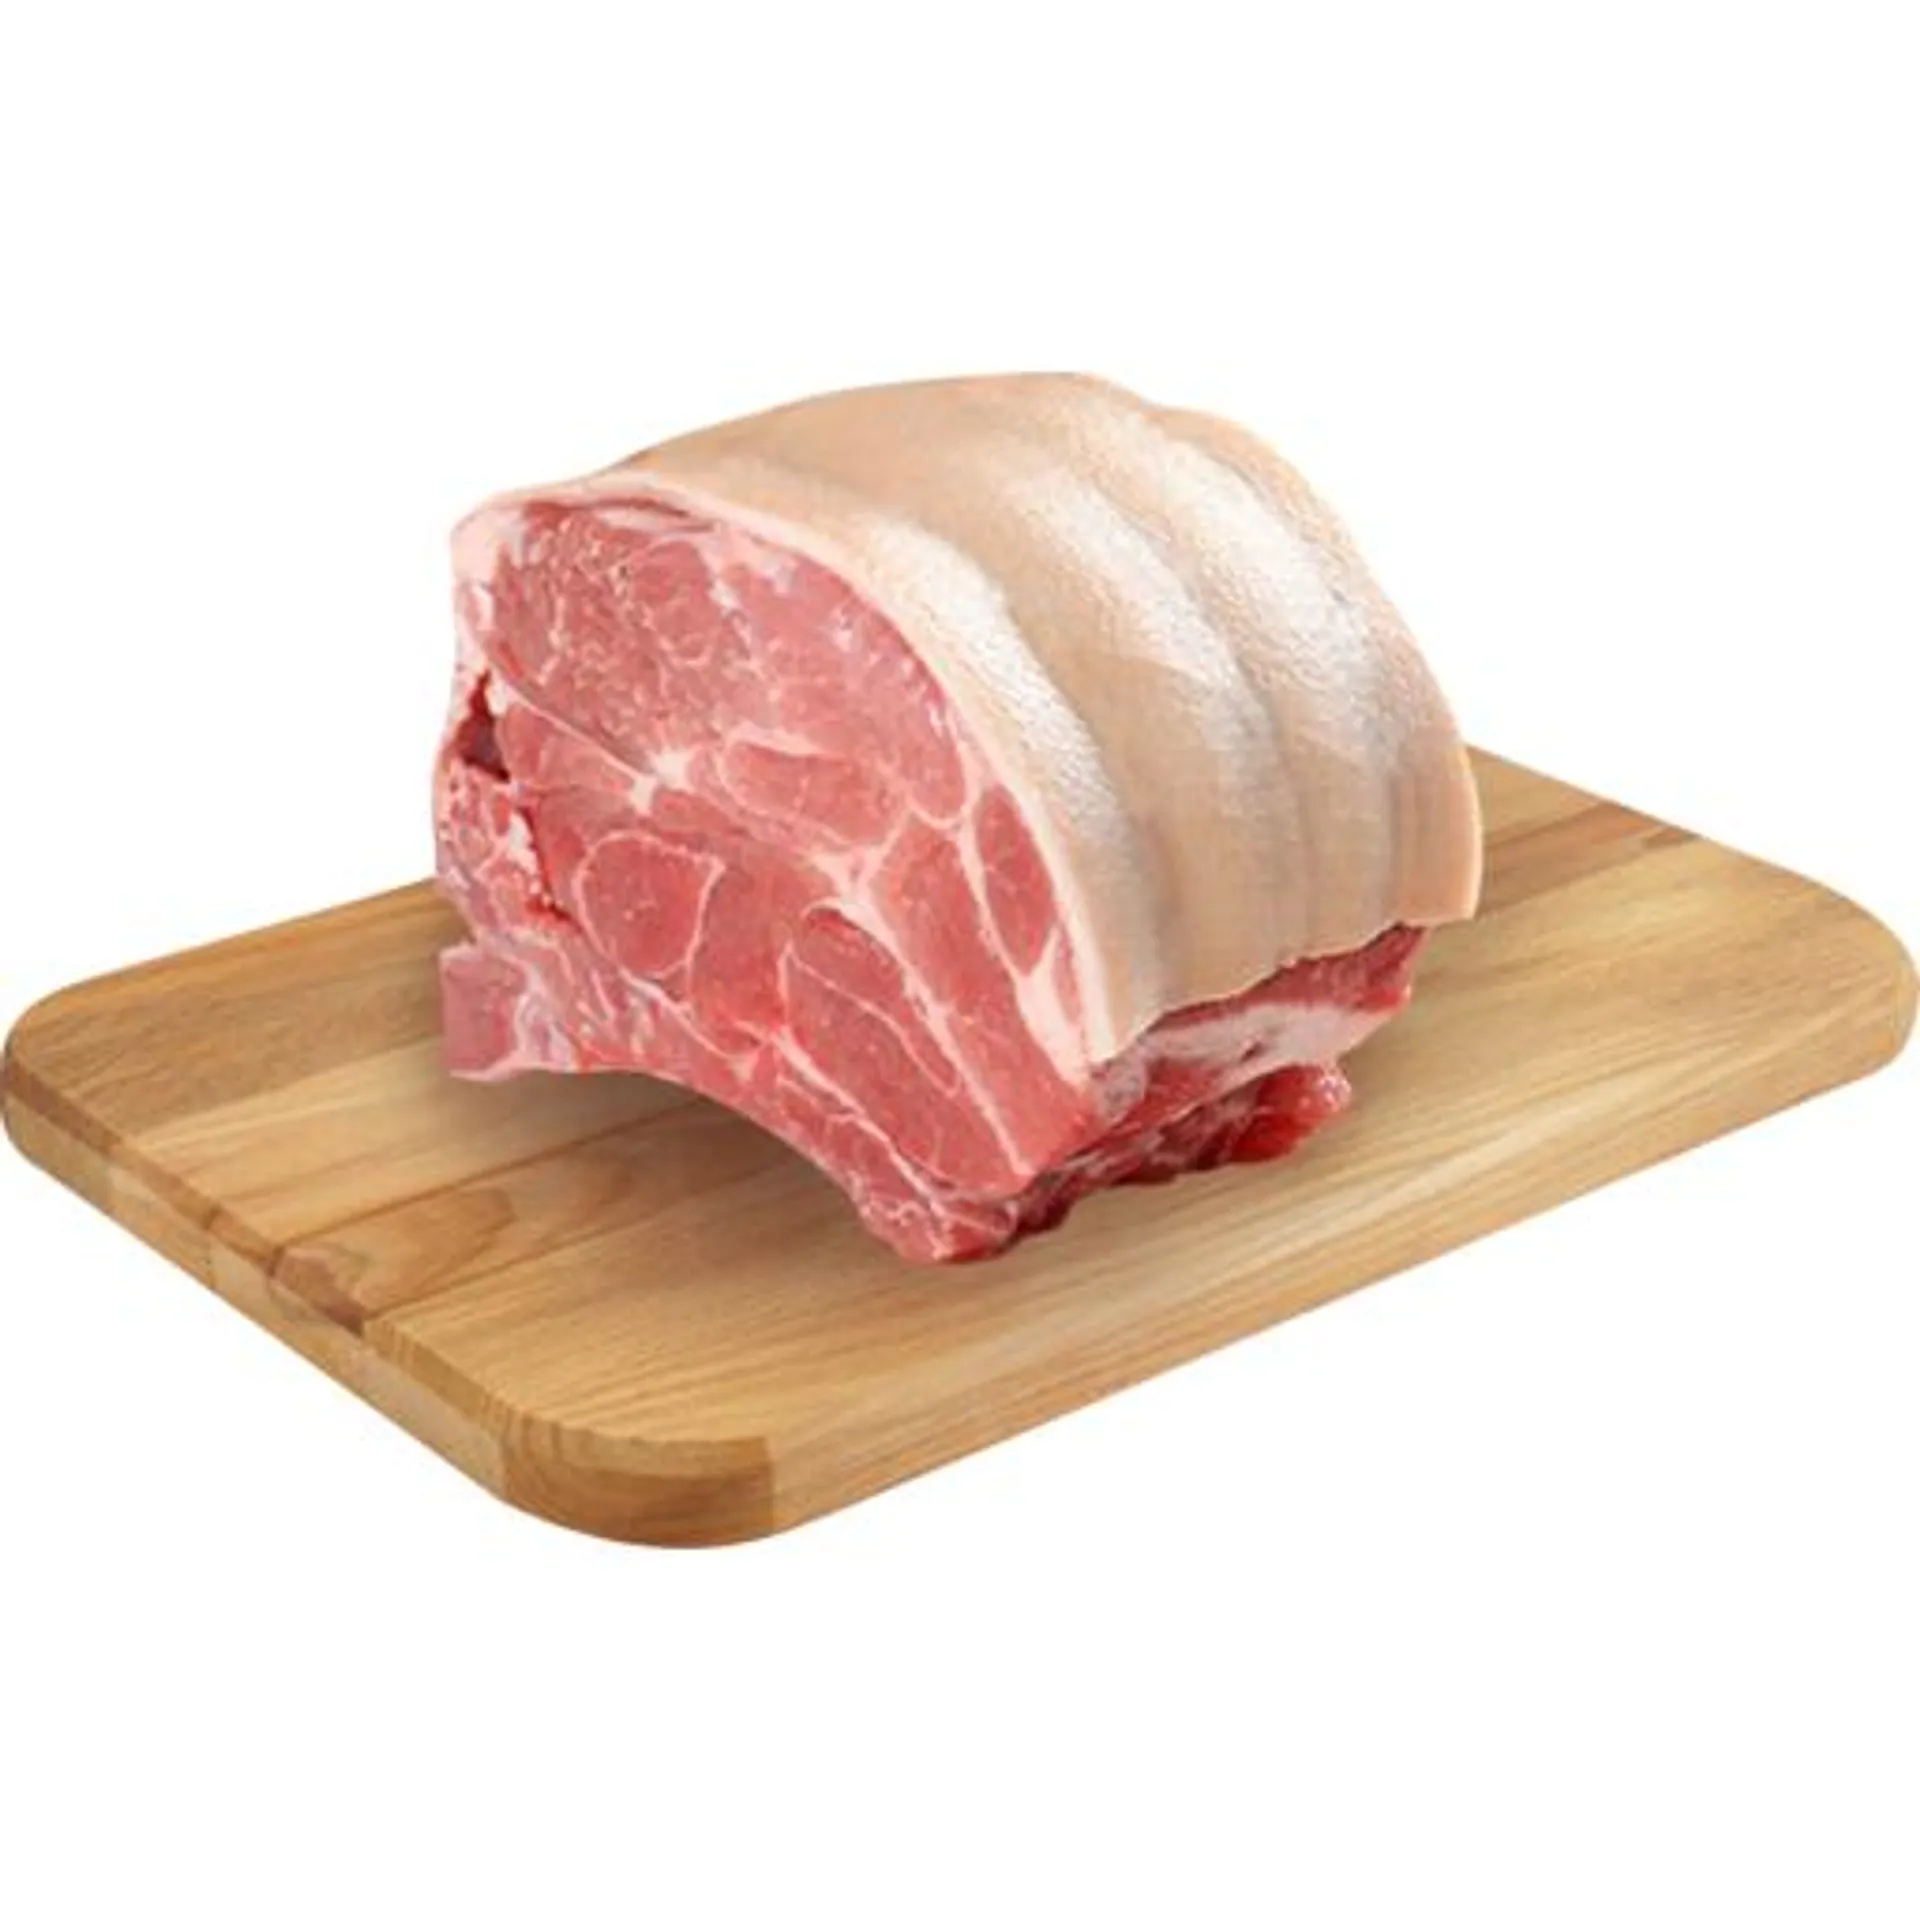 Pork Shoulder Roast Bone In